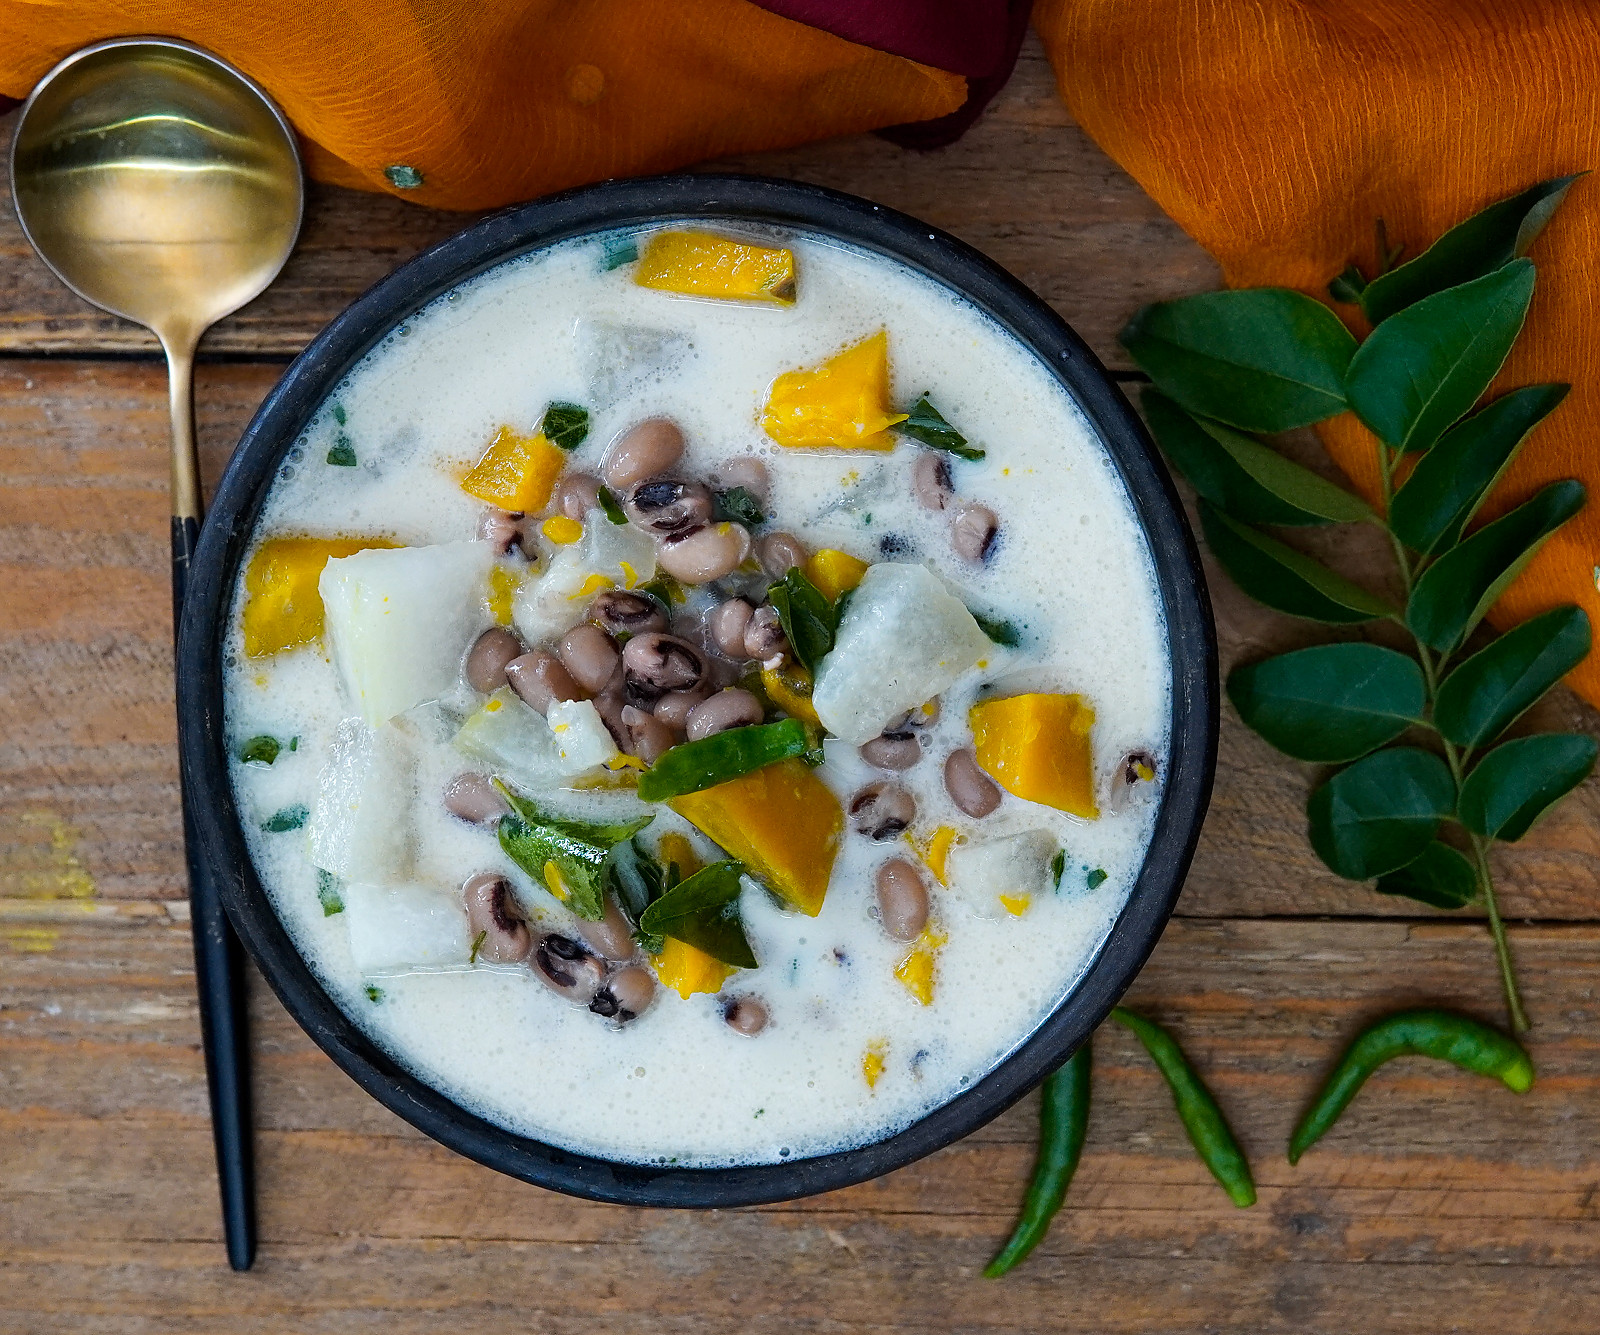 Kerala Olan Recipe with Pumpkin and Black Eyed Beans - Coconut Milk Vegetable Stew